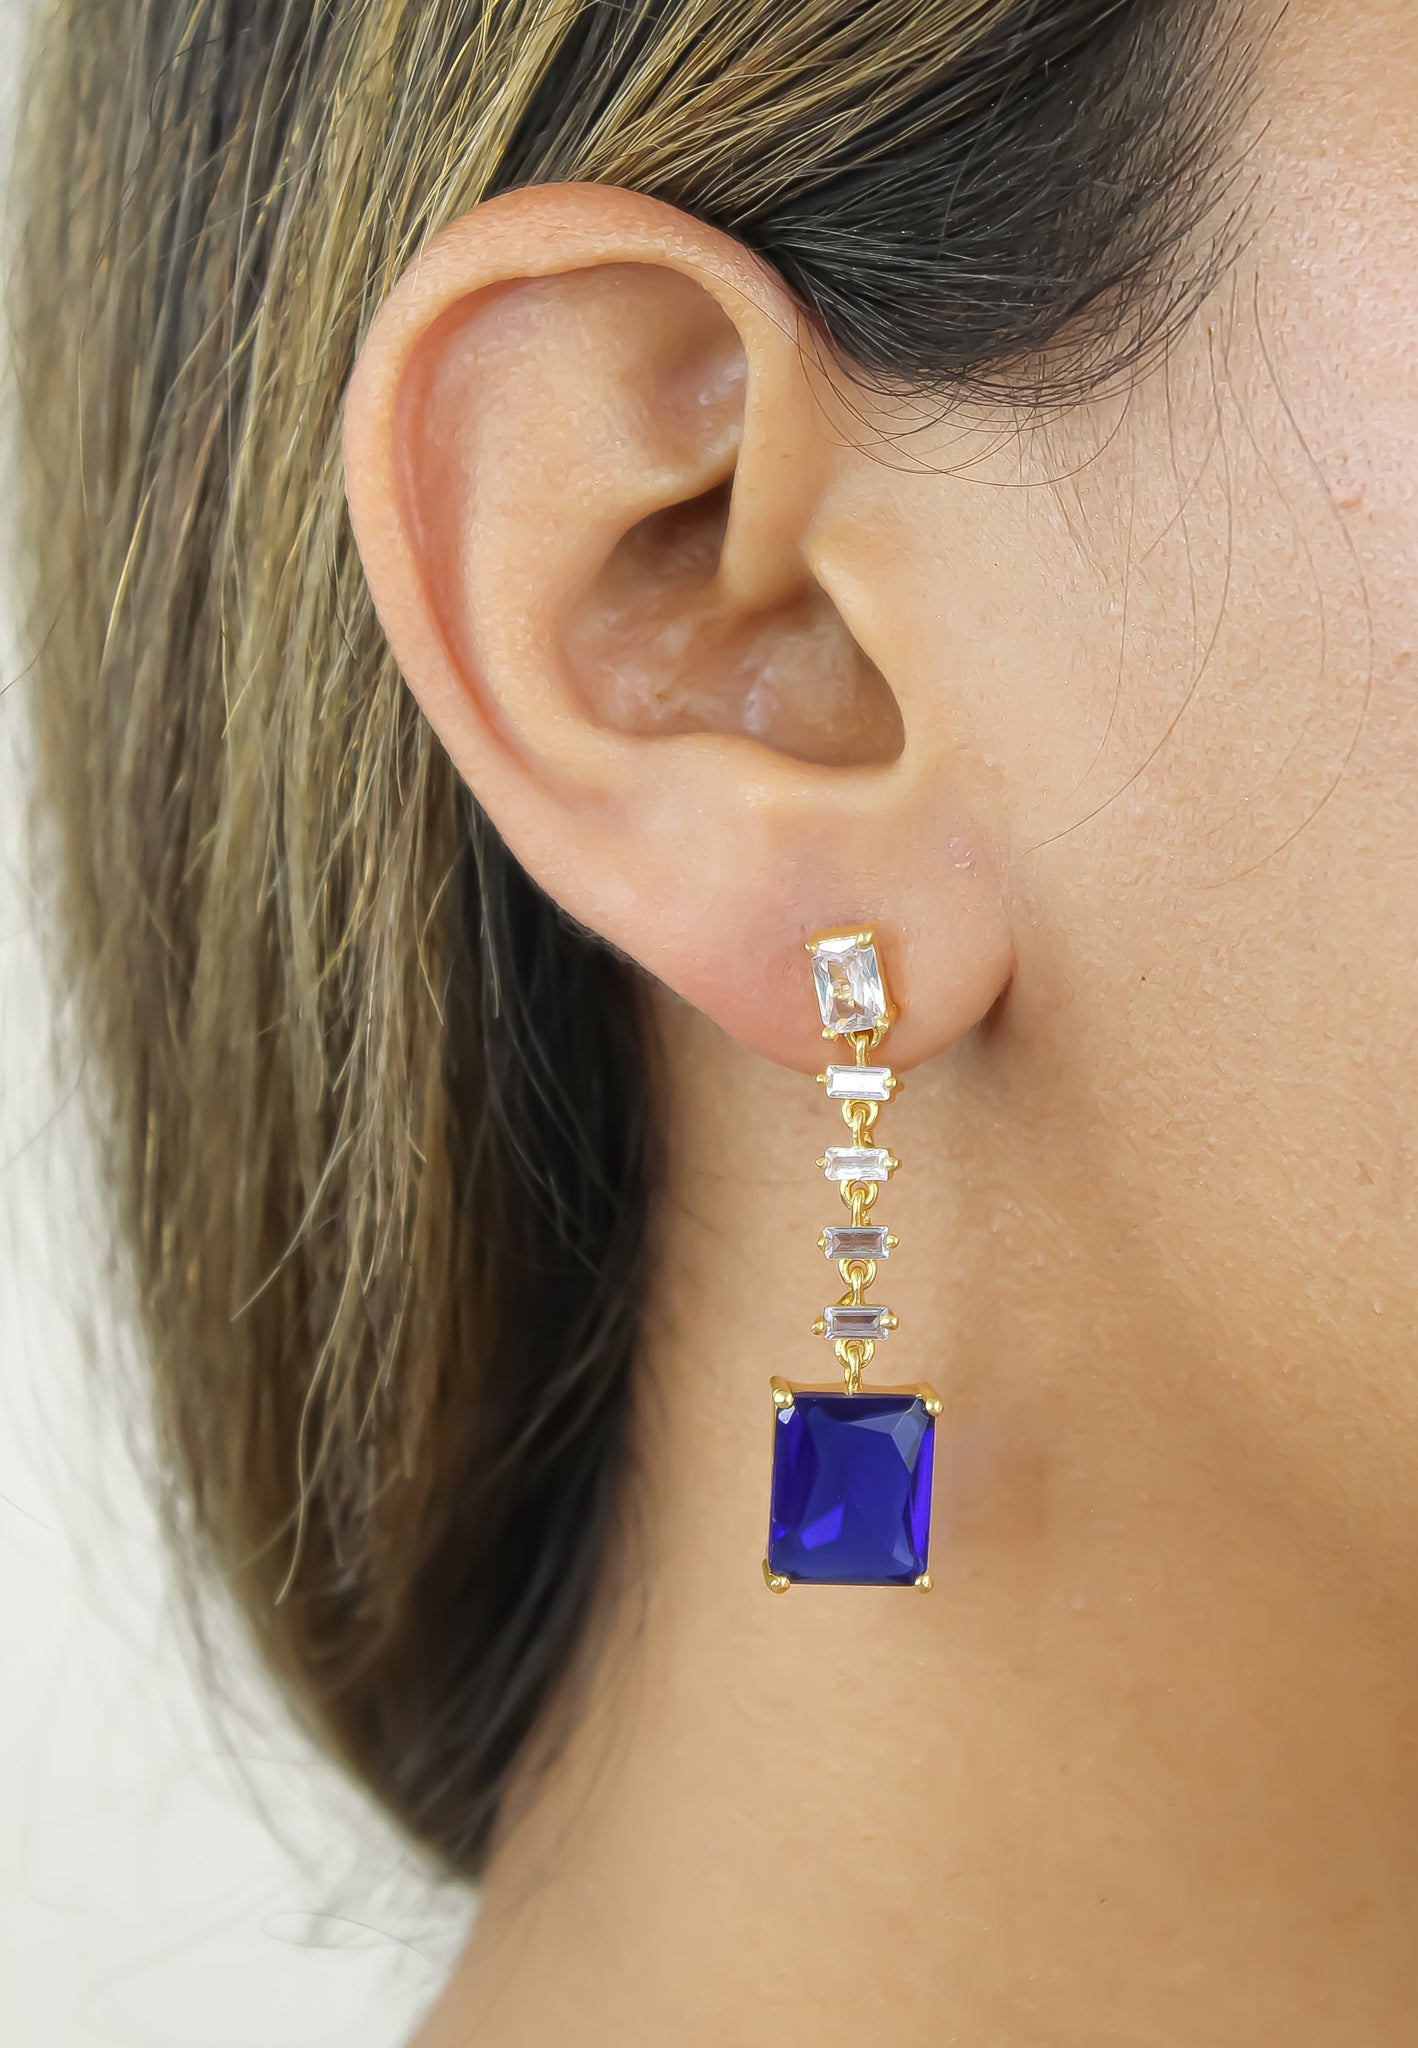 Golden Cruise Benares Earrings: 18K Gold-Plated with Zirconia Stones for Sensitive Ears - Jewelry & Watches - Bijou Her -  -  - 